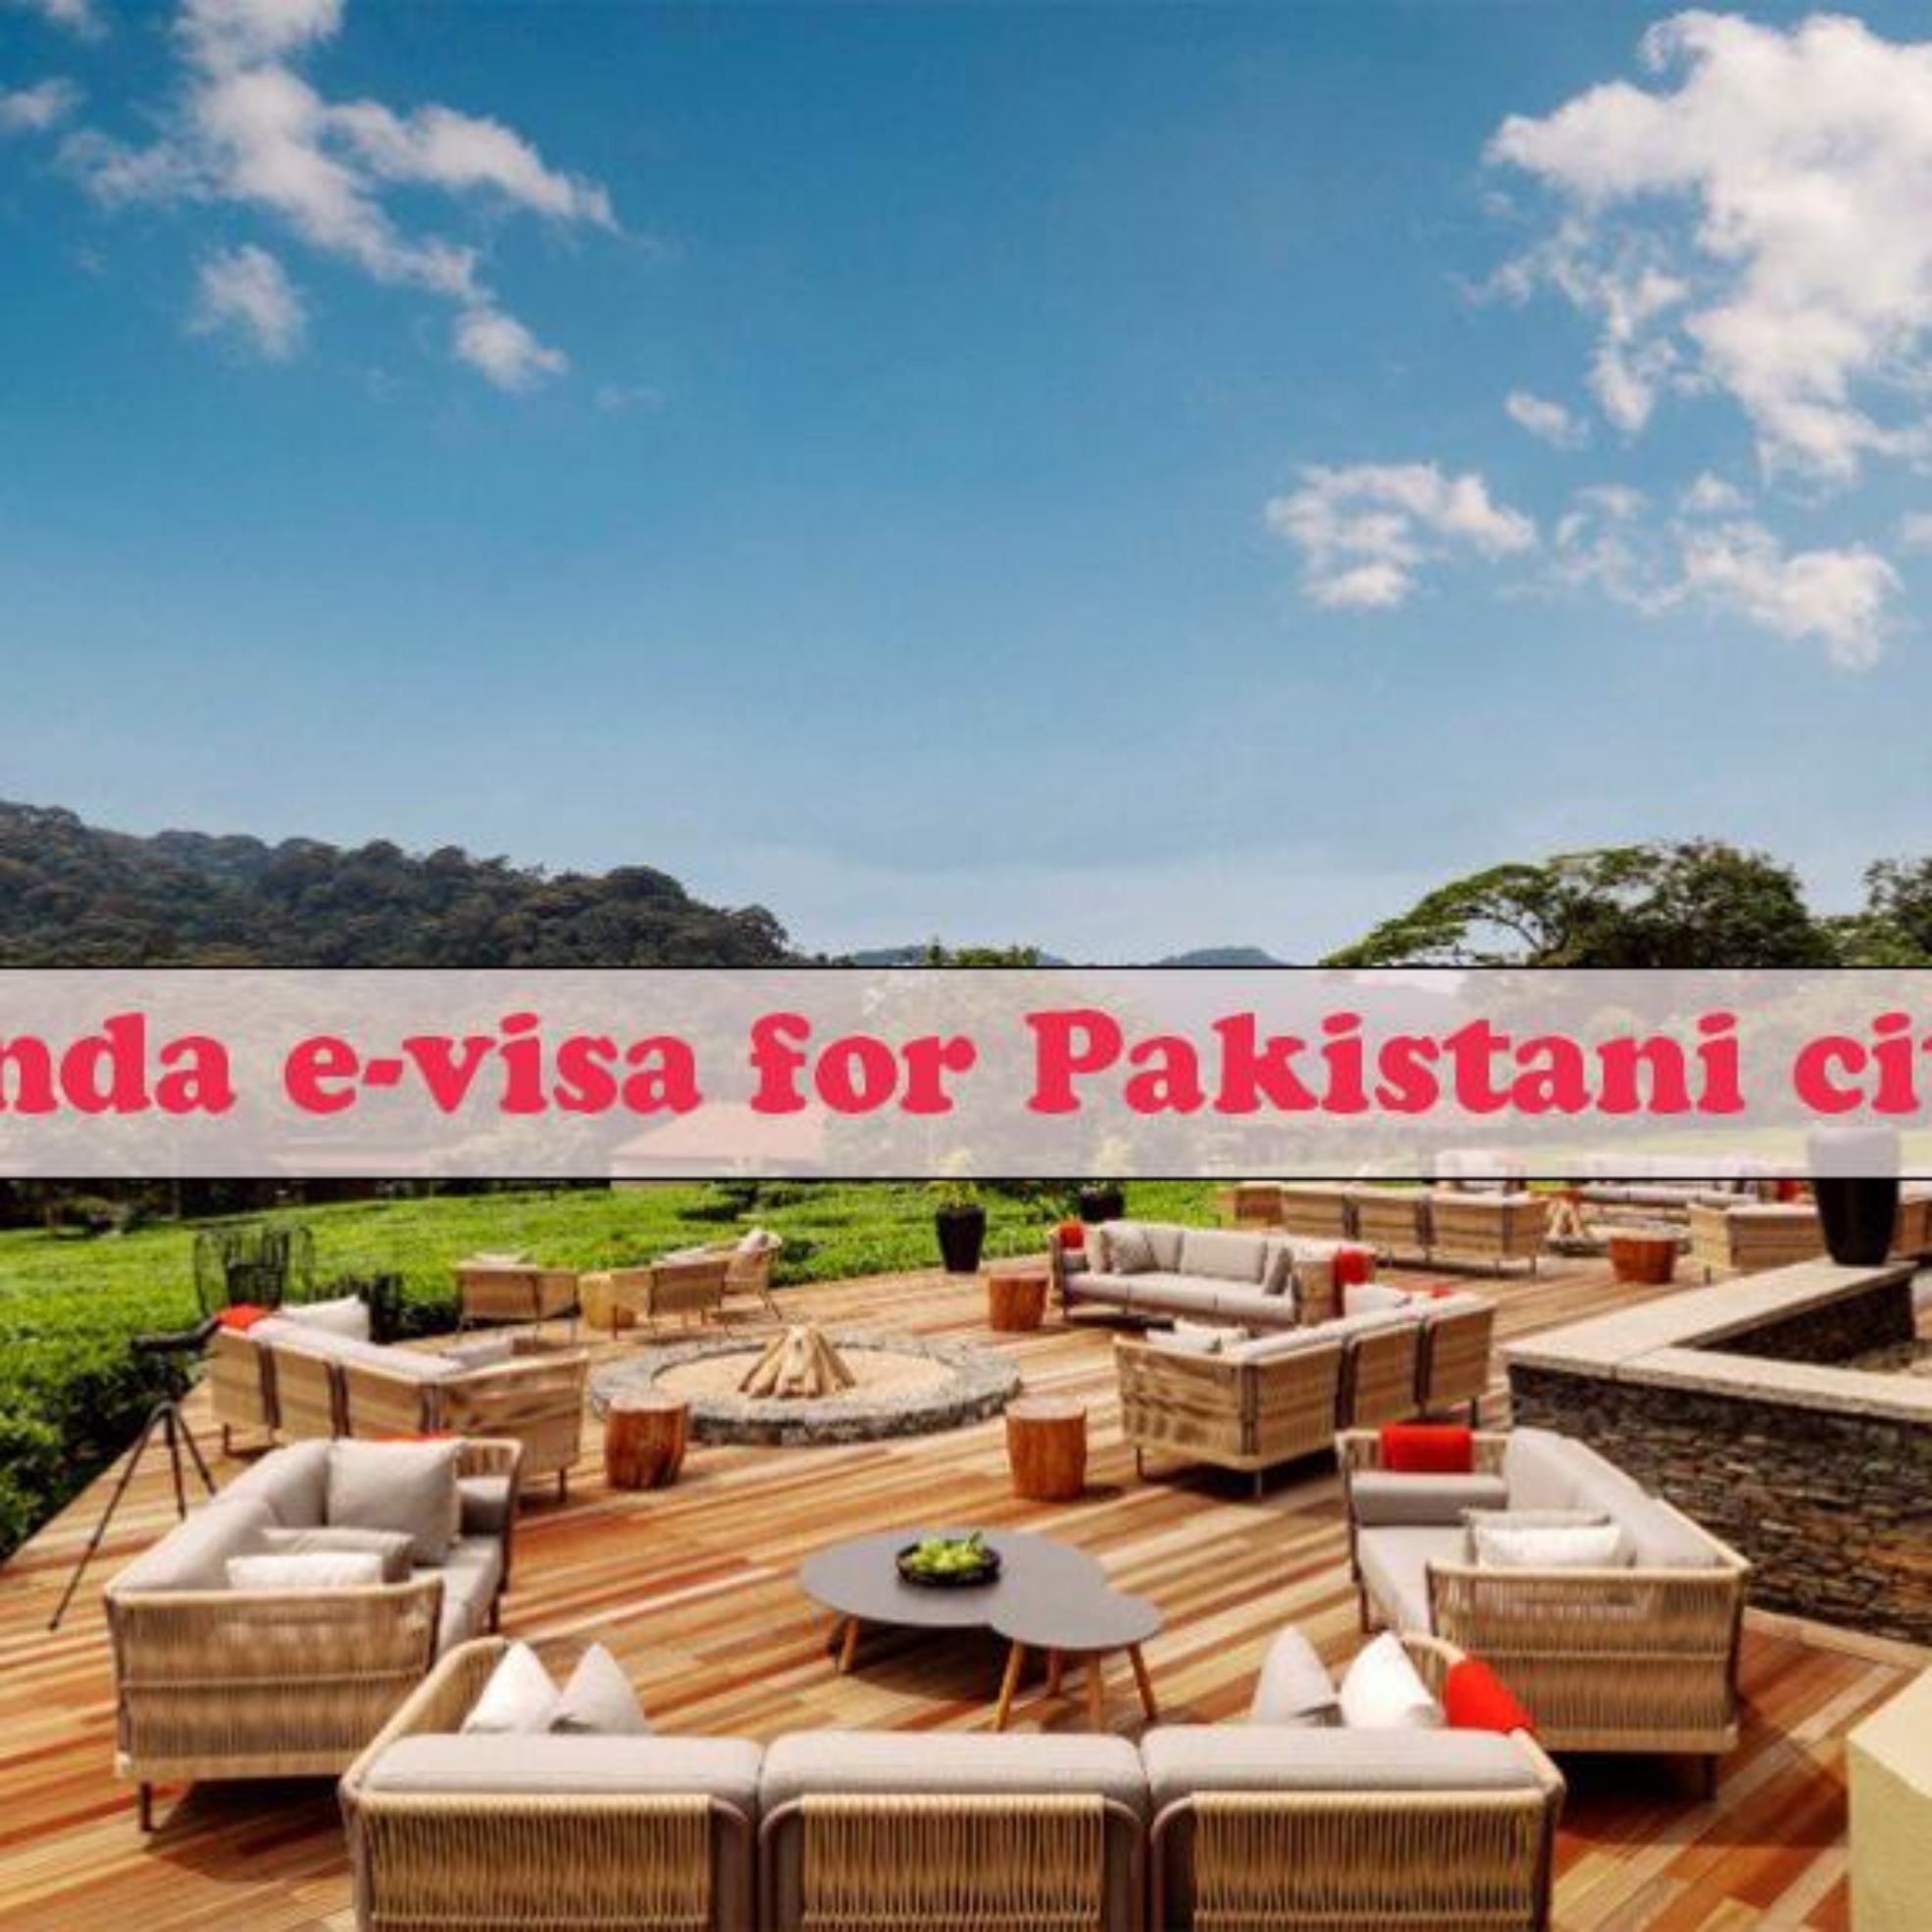 Rwanda e-visa for Pakistani citizens